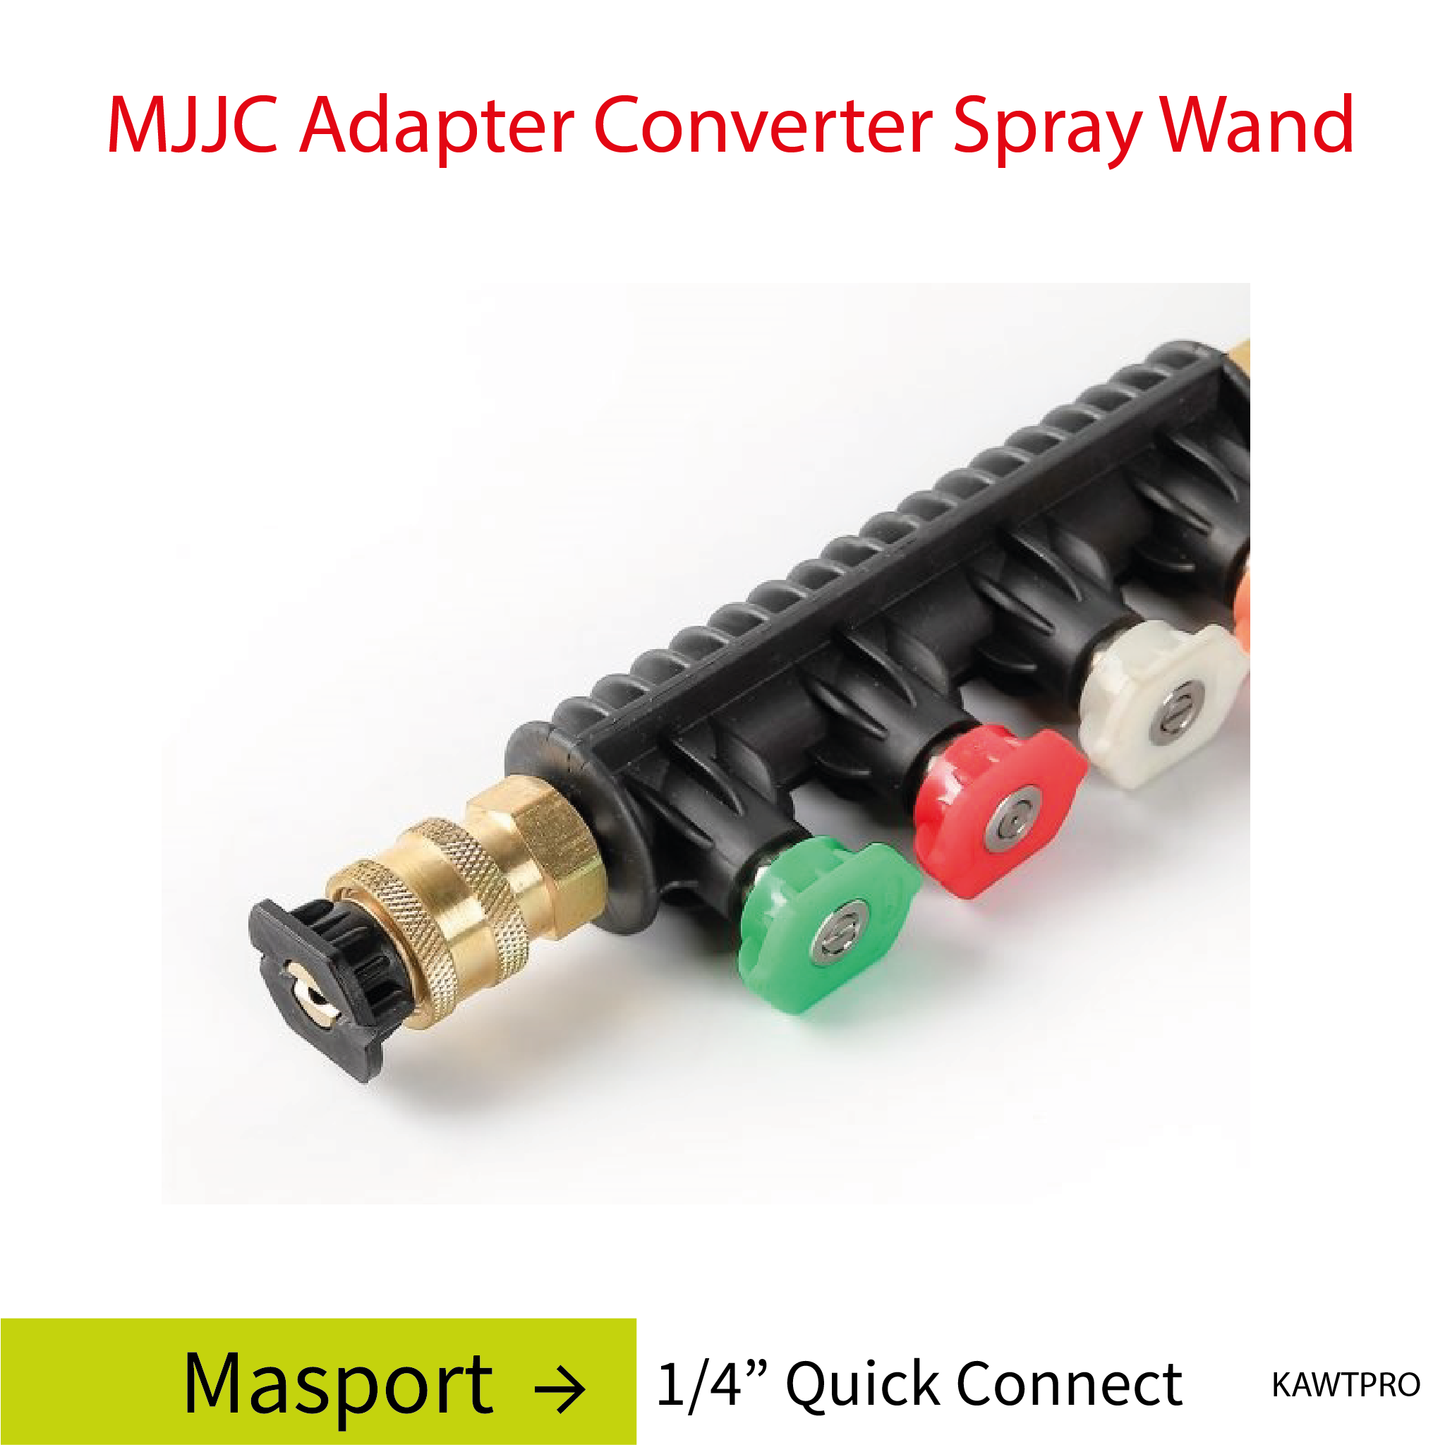 Masport AVA MJJC Pressure Washer Adapter Conversion Converter Spray Wand with 5 spray tips